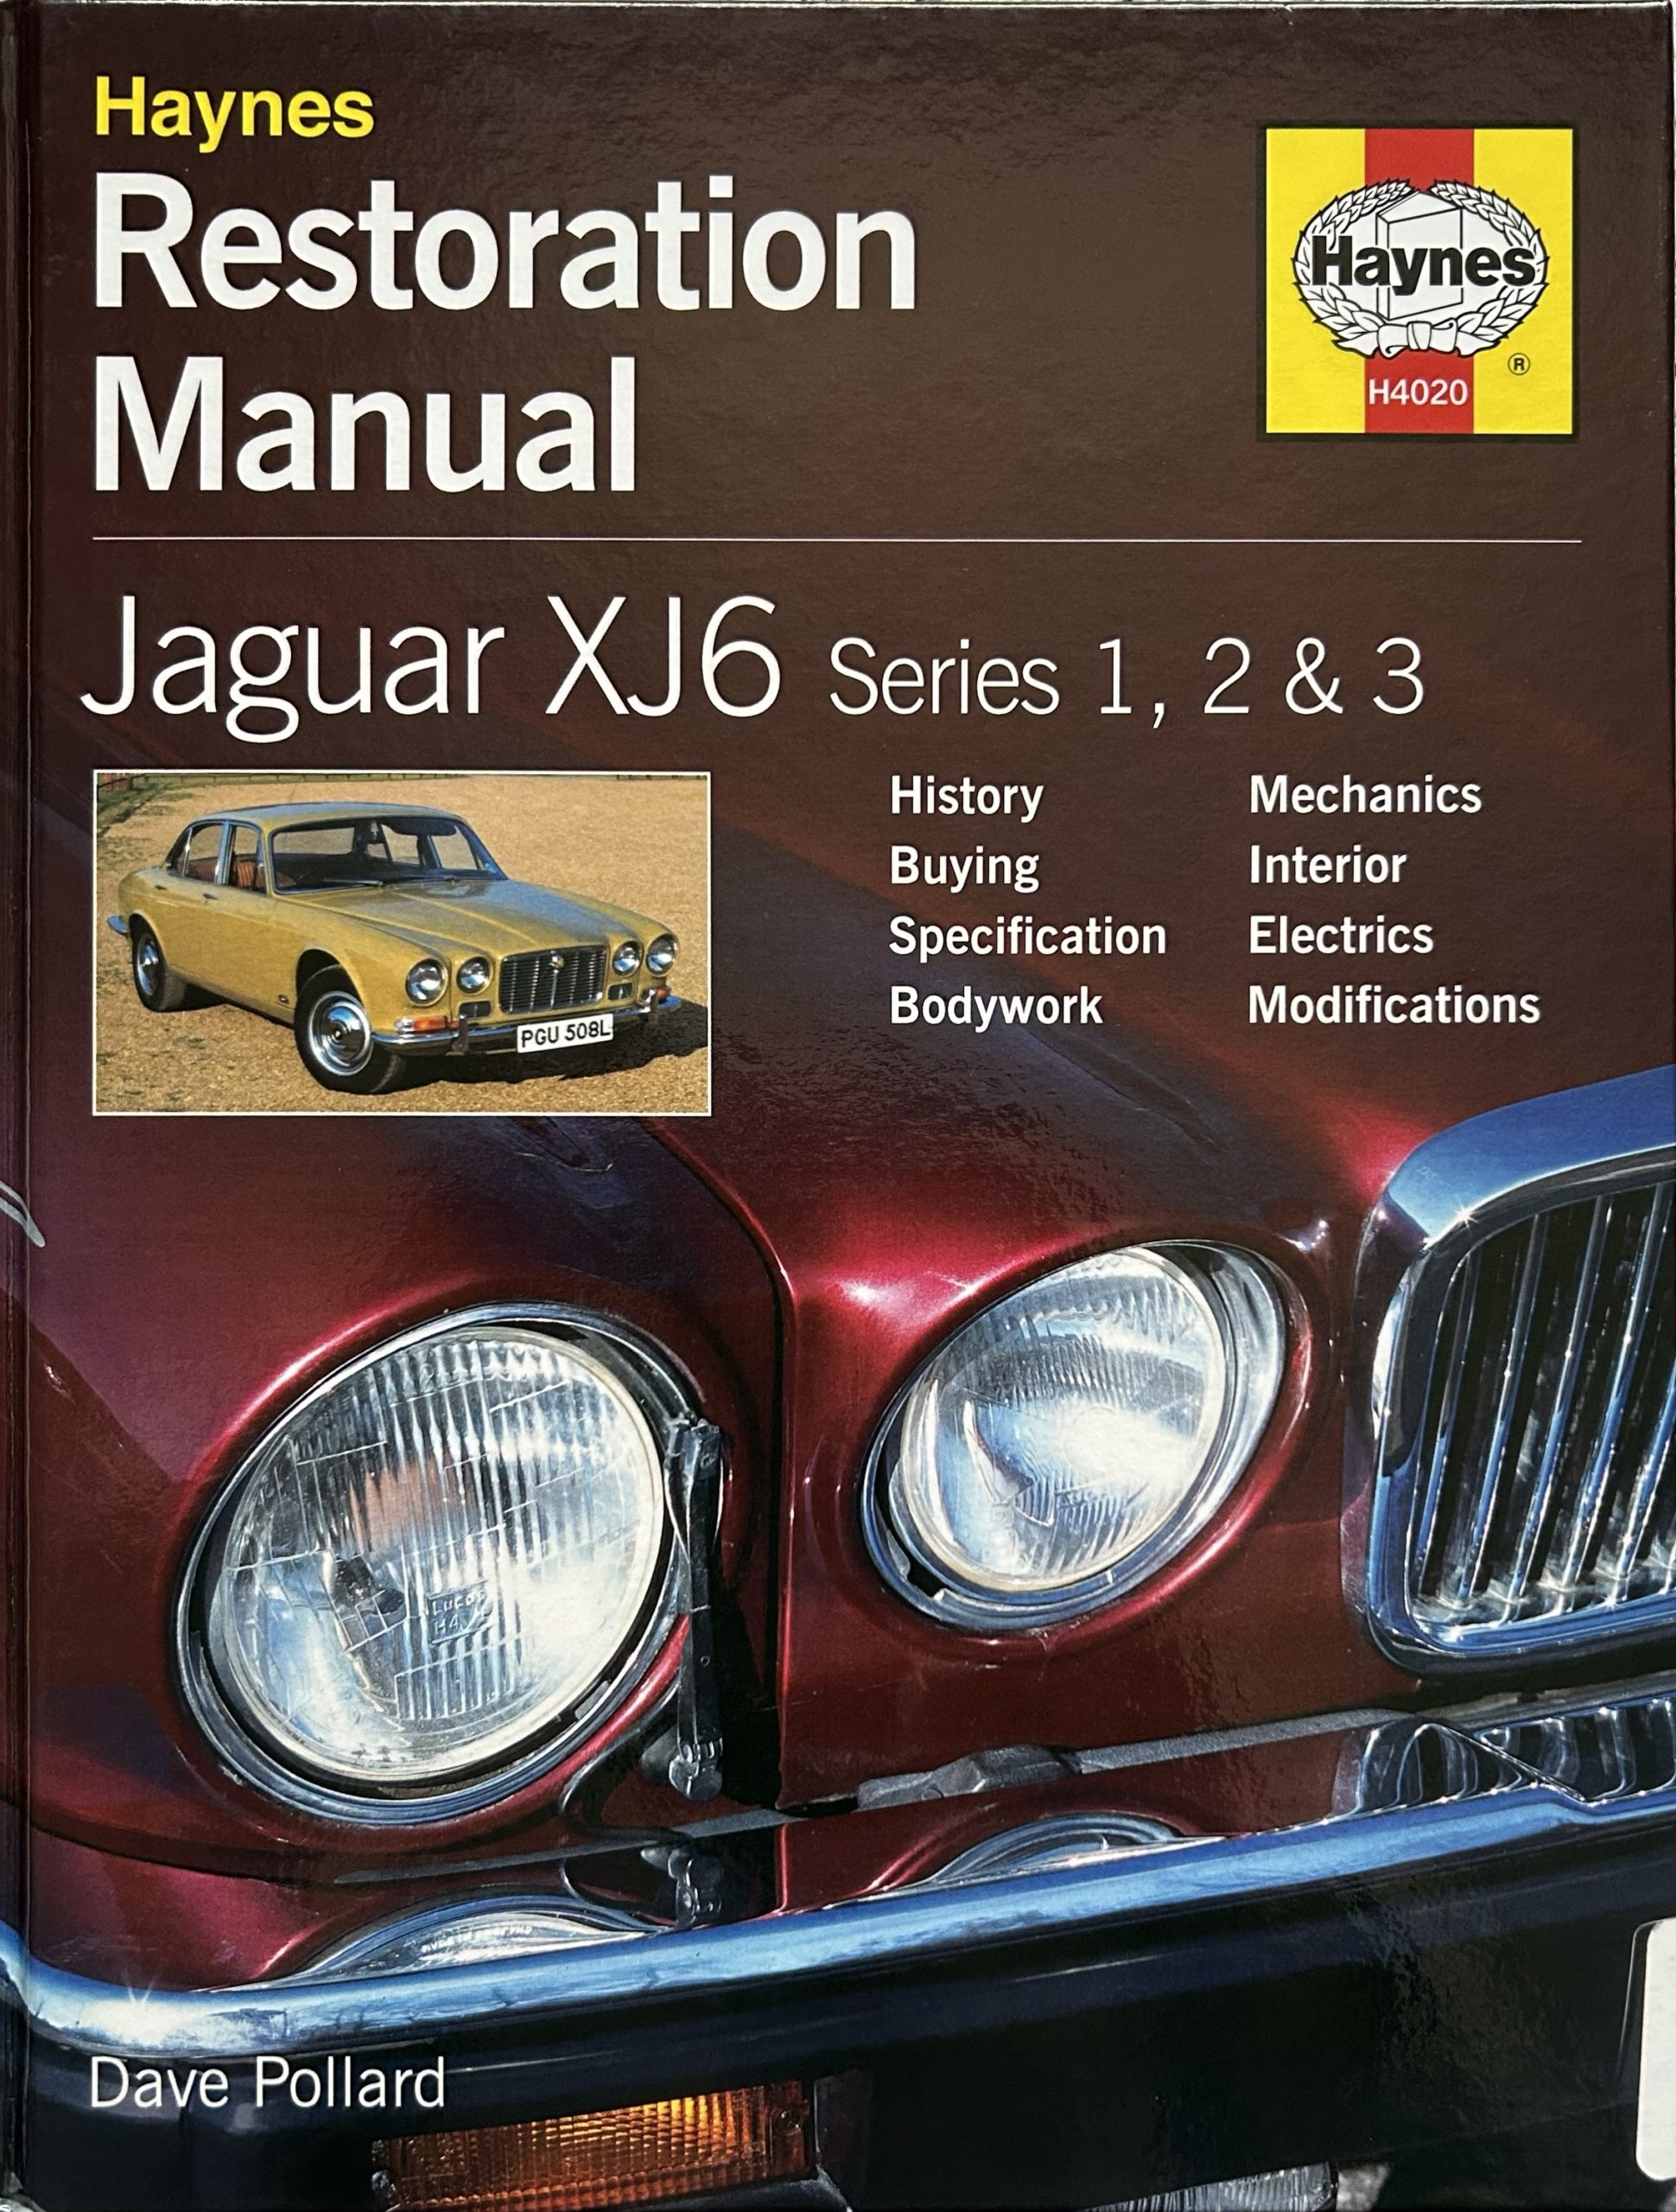 Haynes Restoration Manual Jaguar XJ6 series 1, 2, & 3 by Dave Pollard